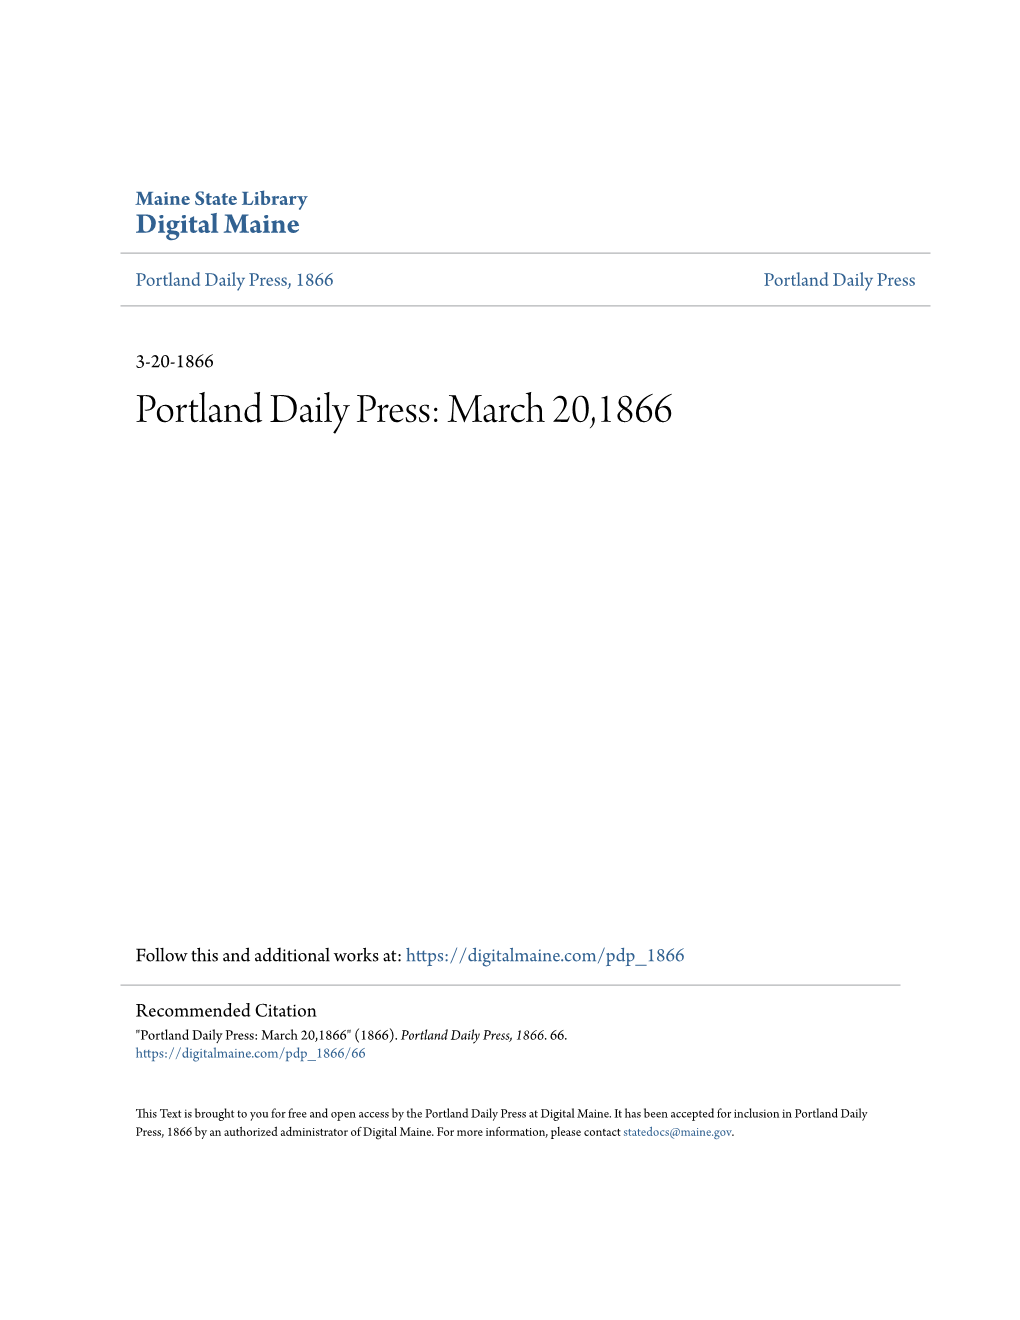 Portland Daily Press: March 20,1866